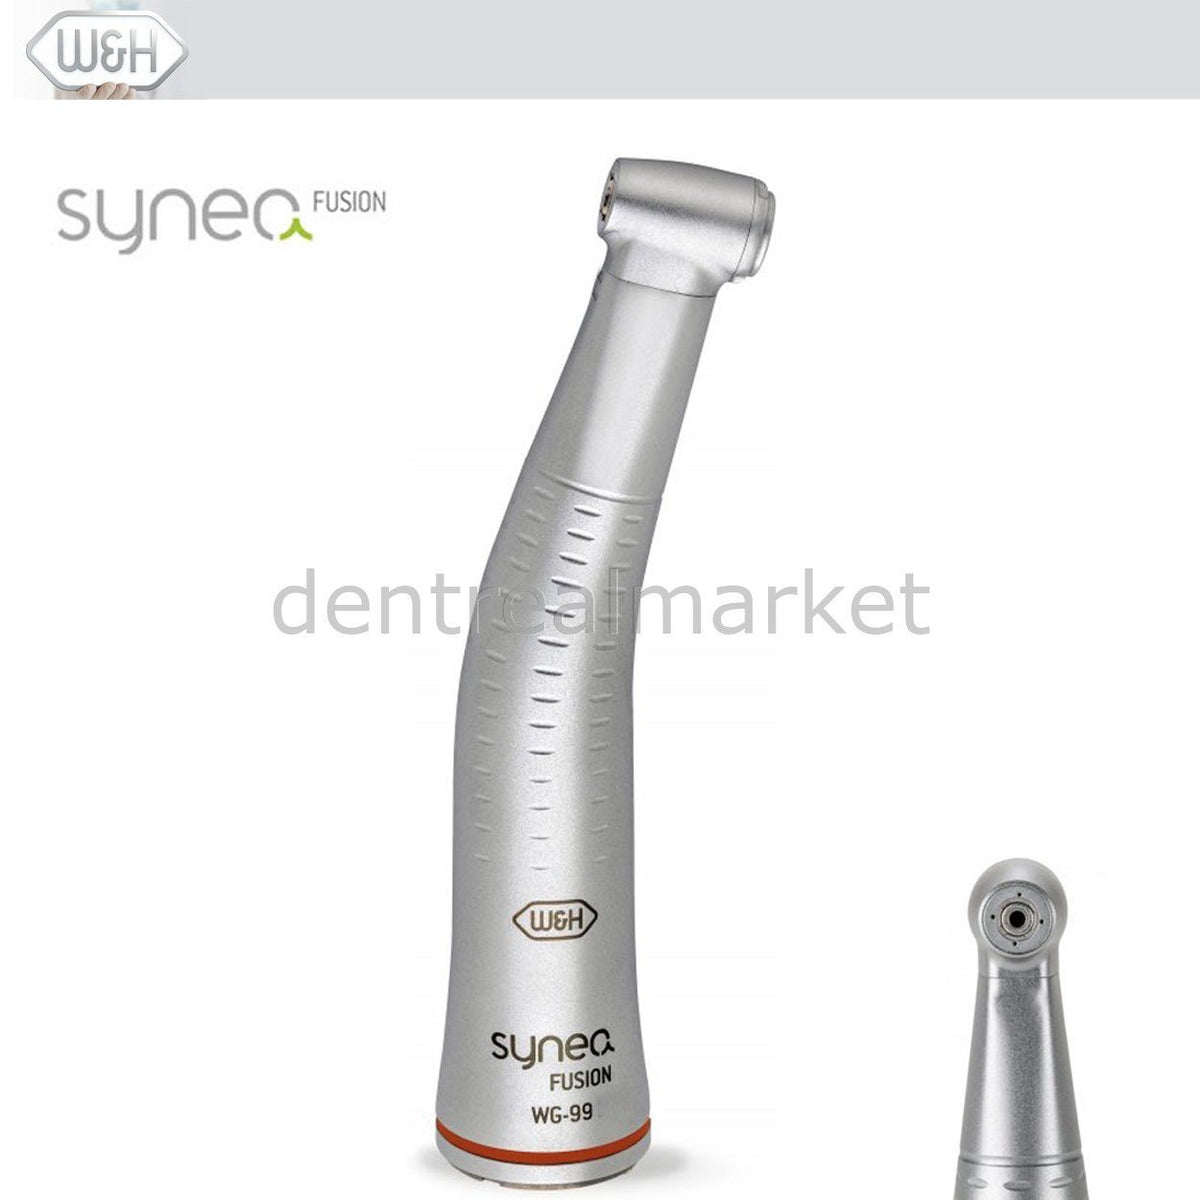 DentrealStore - W&H Dental WG-99 A Synea Fusion Red Belt Contra-angle